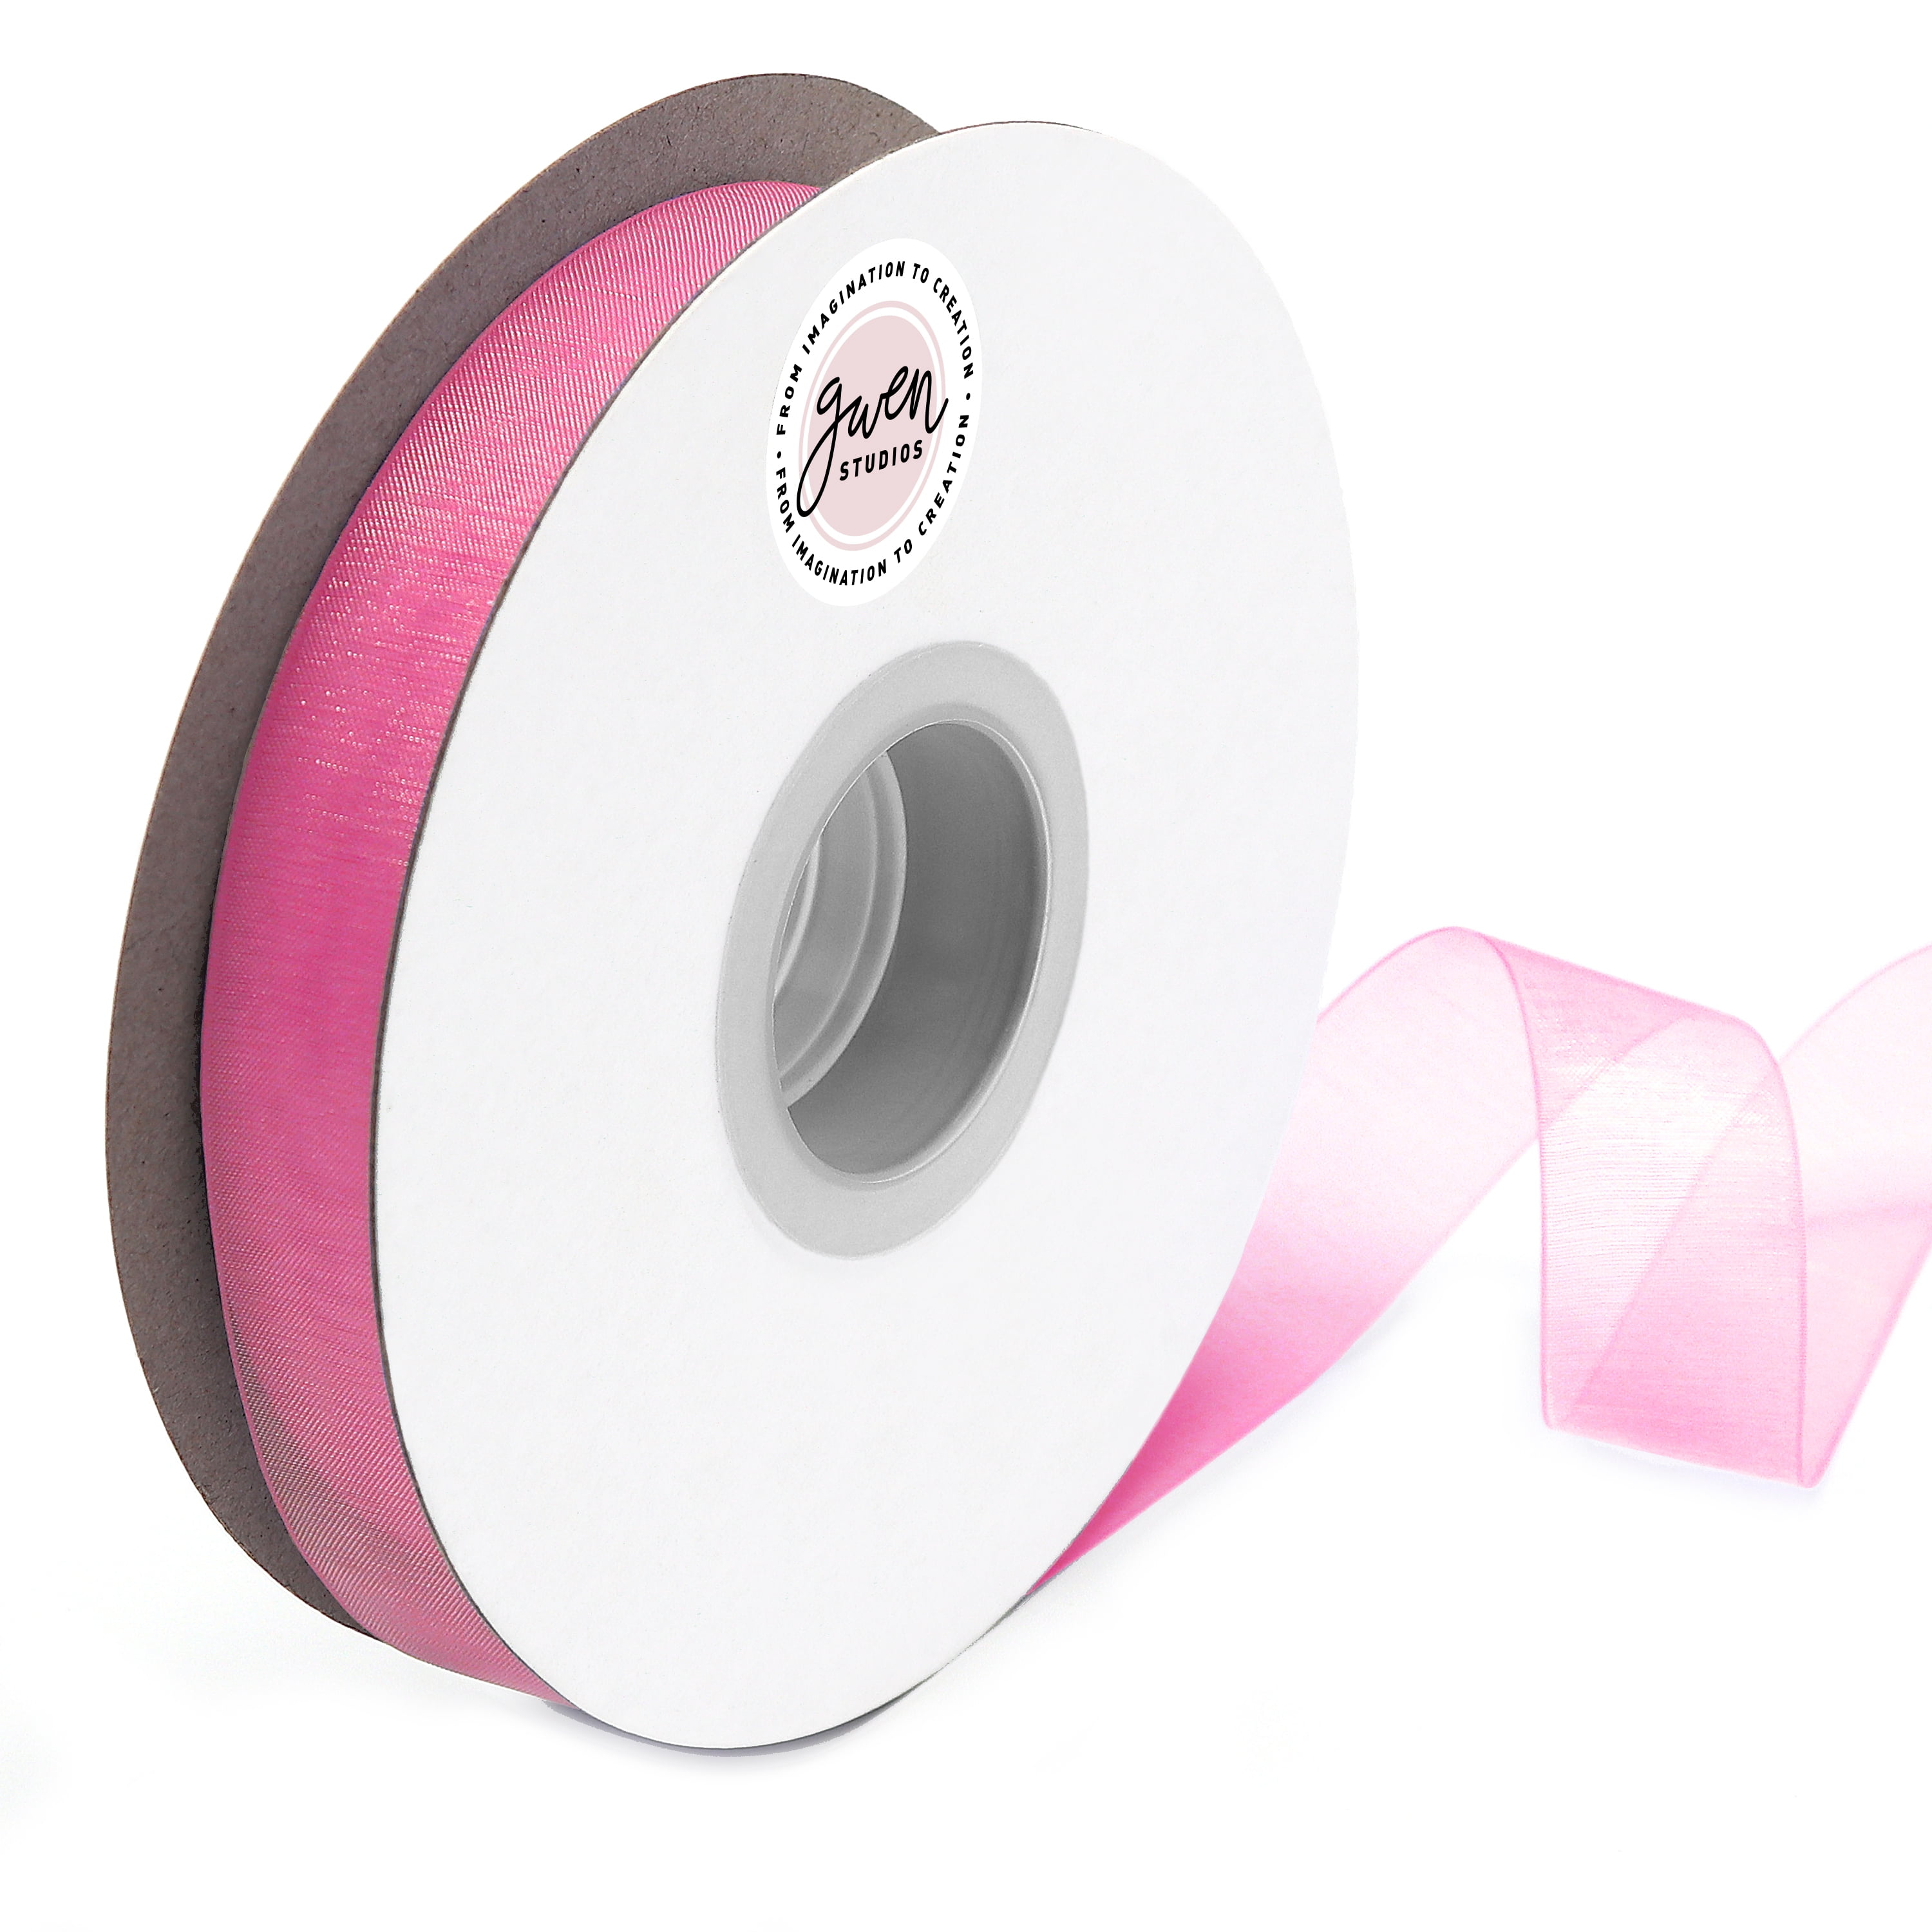 Deep Red Velvet String Ribbon - 1/8 inch - 1 Yard – Sugar Pink